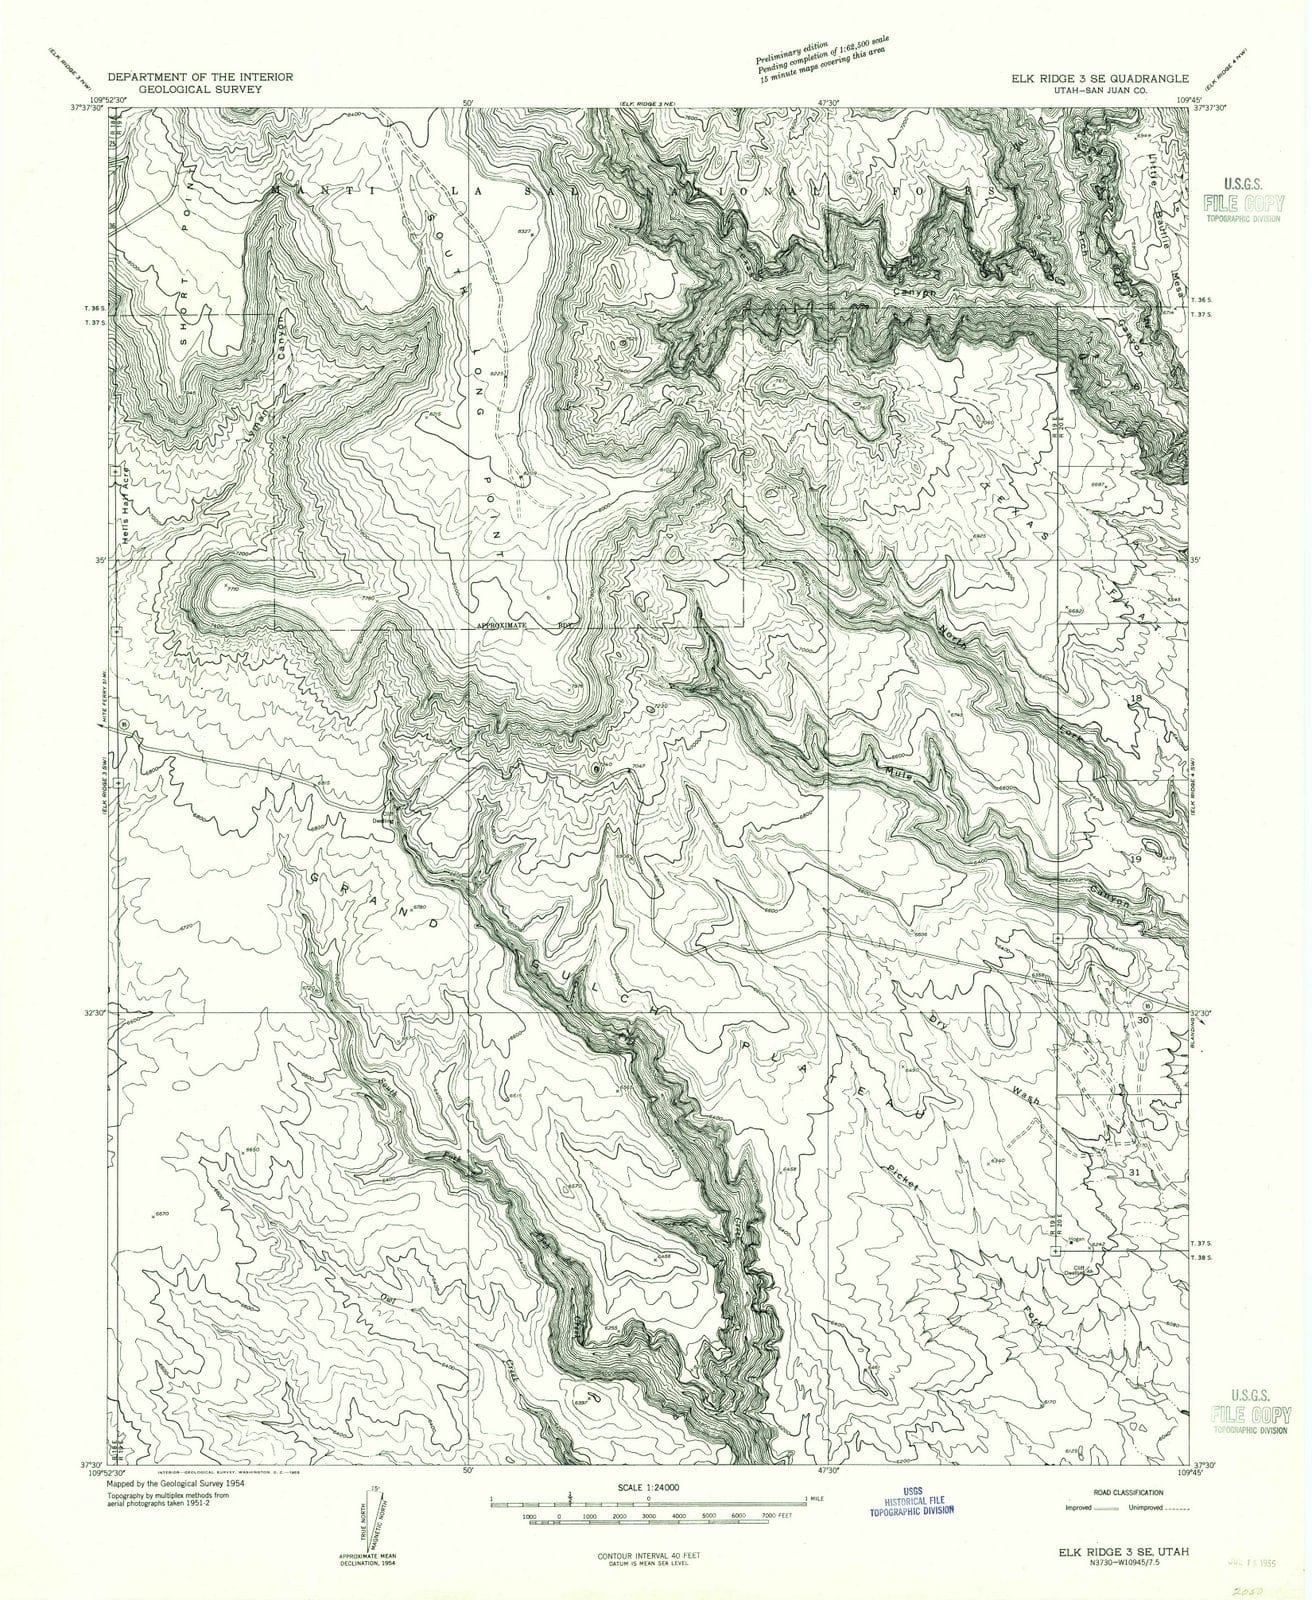 1954 Elk Ridge 3, UT - Utah - USGS Topographic Map v3